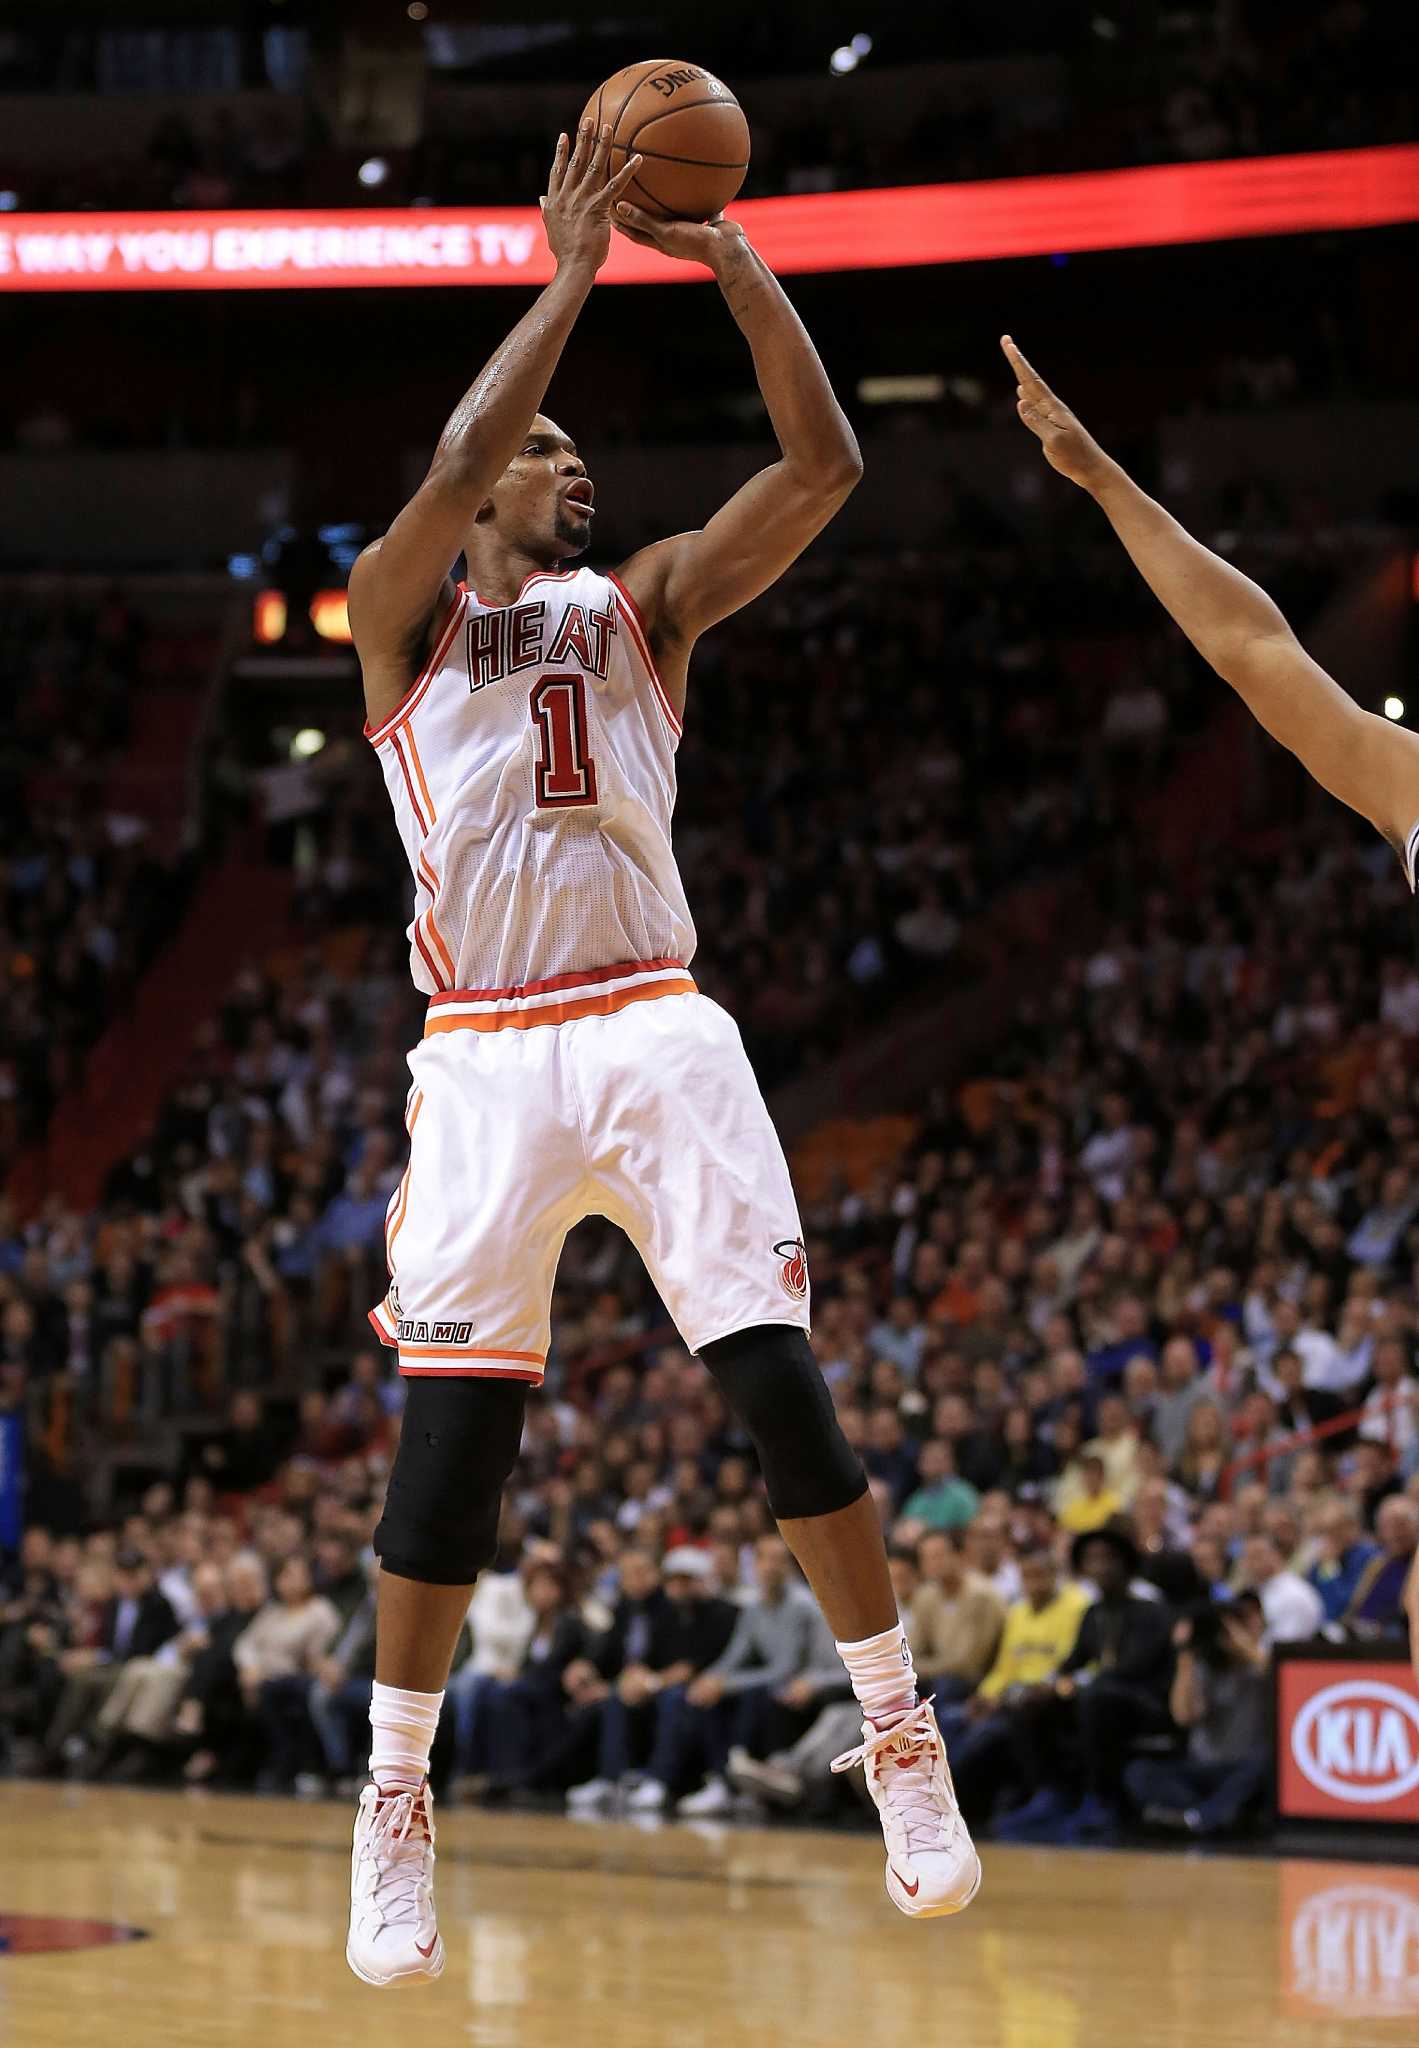 Report: Chris Bosh Not Ruling Out Return to NBA This Season